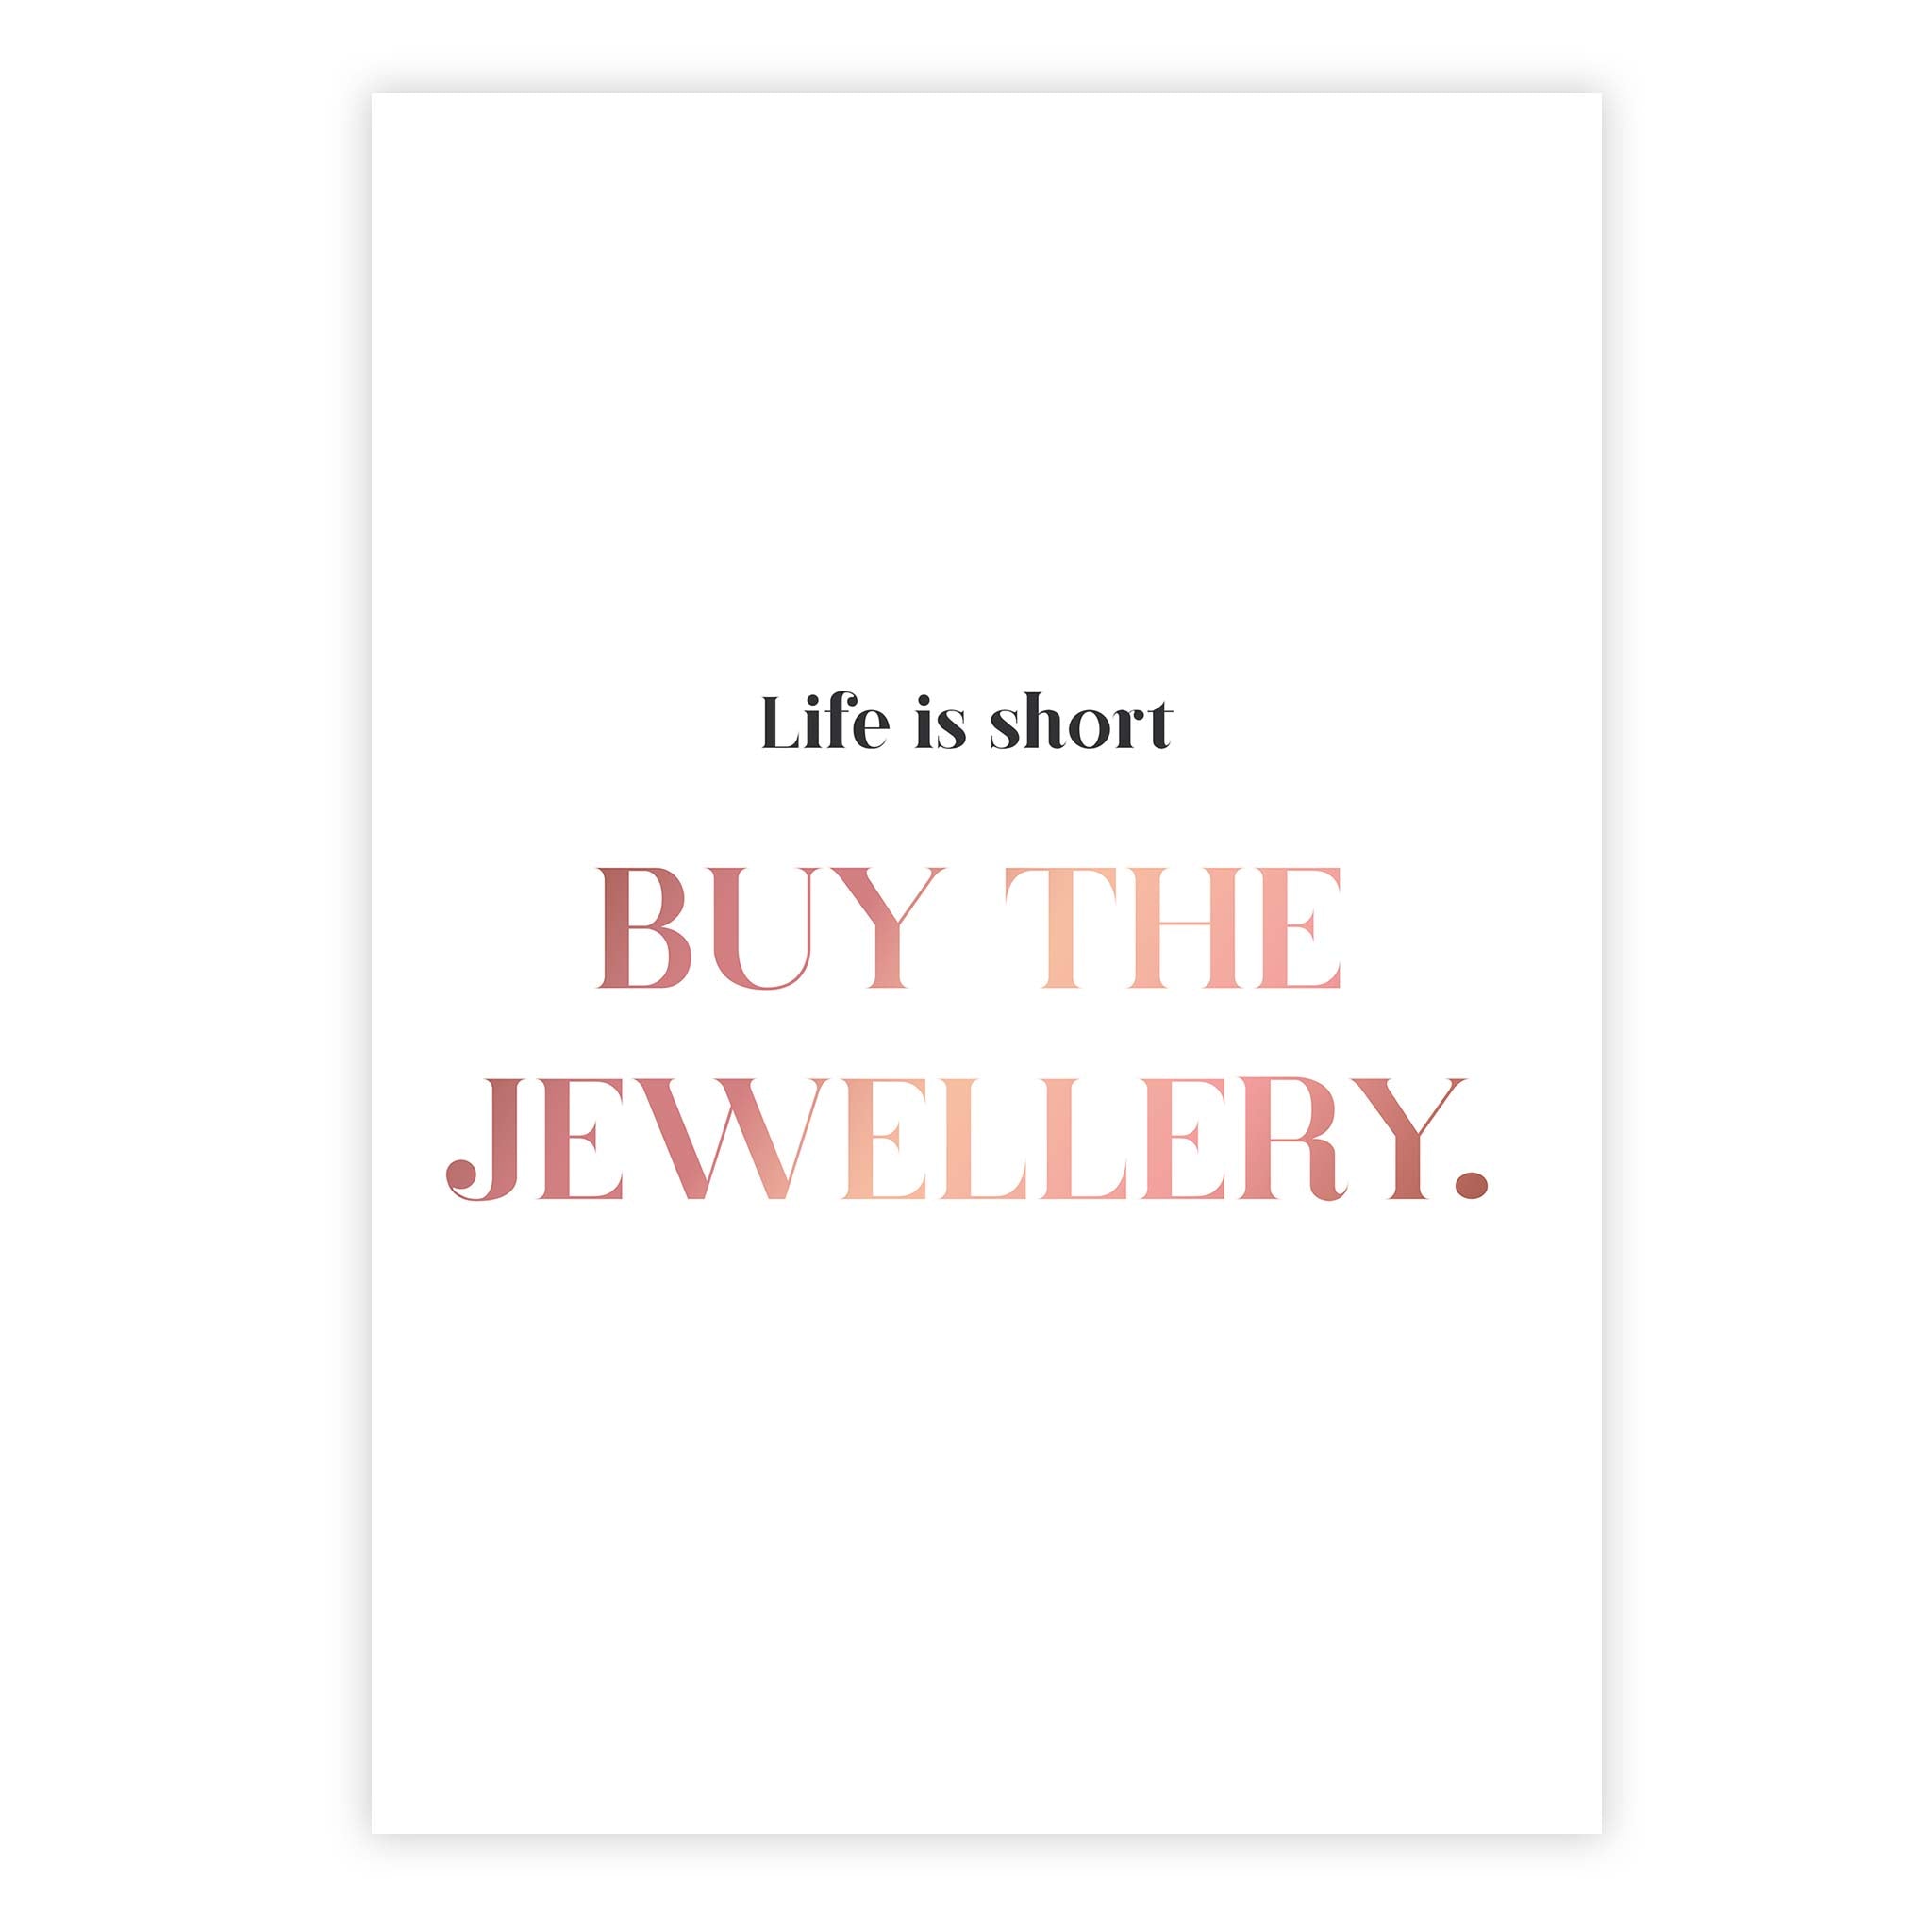 Life is short buy the jewellery